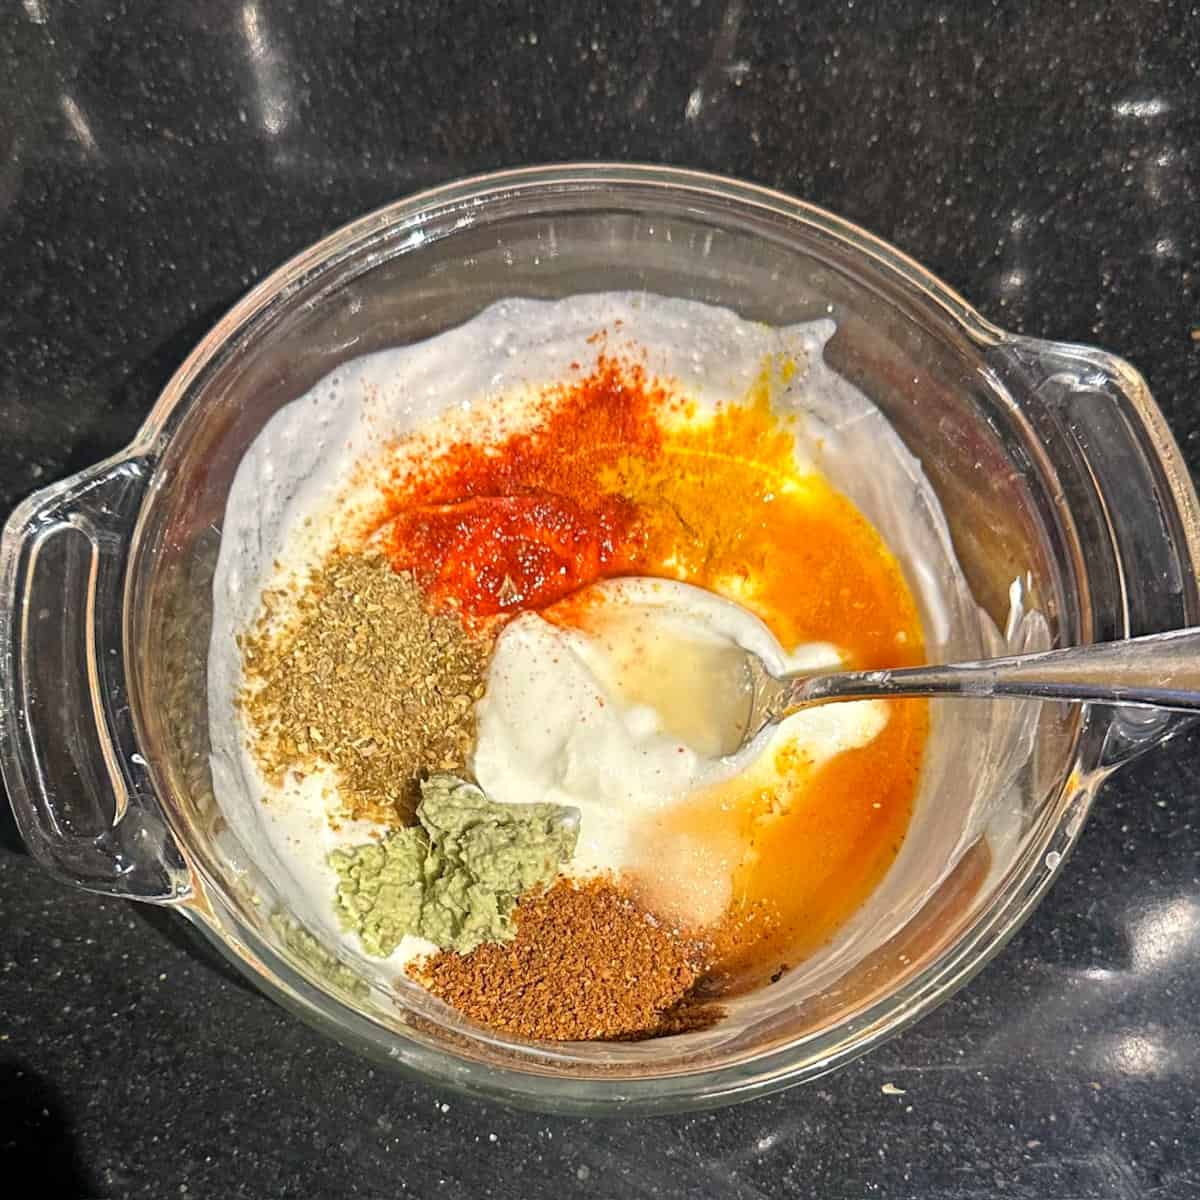 Spices added to vegan yogurt for tikka masala marinade.